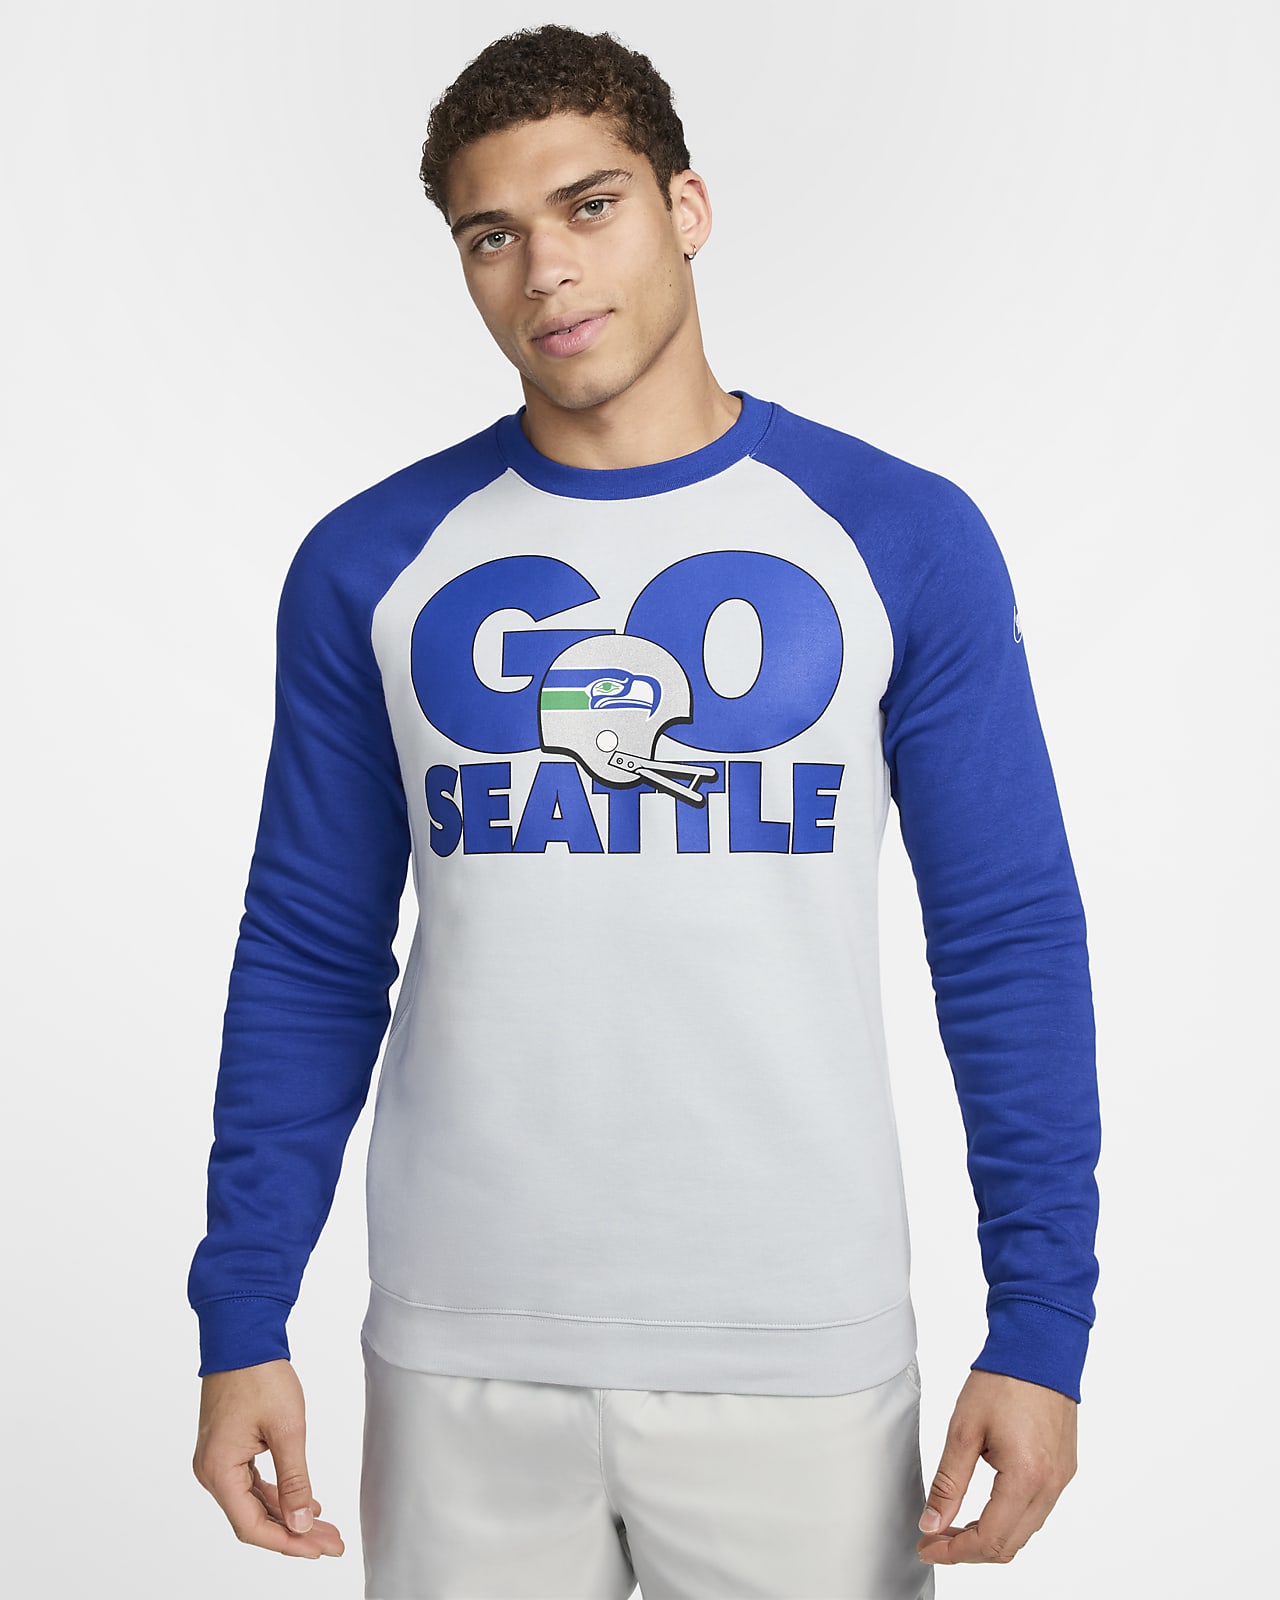 Nike Historic Raglan (NFL Seahawks) Men's Sweatshirt